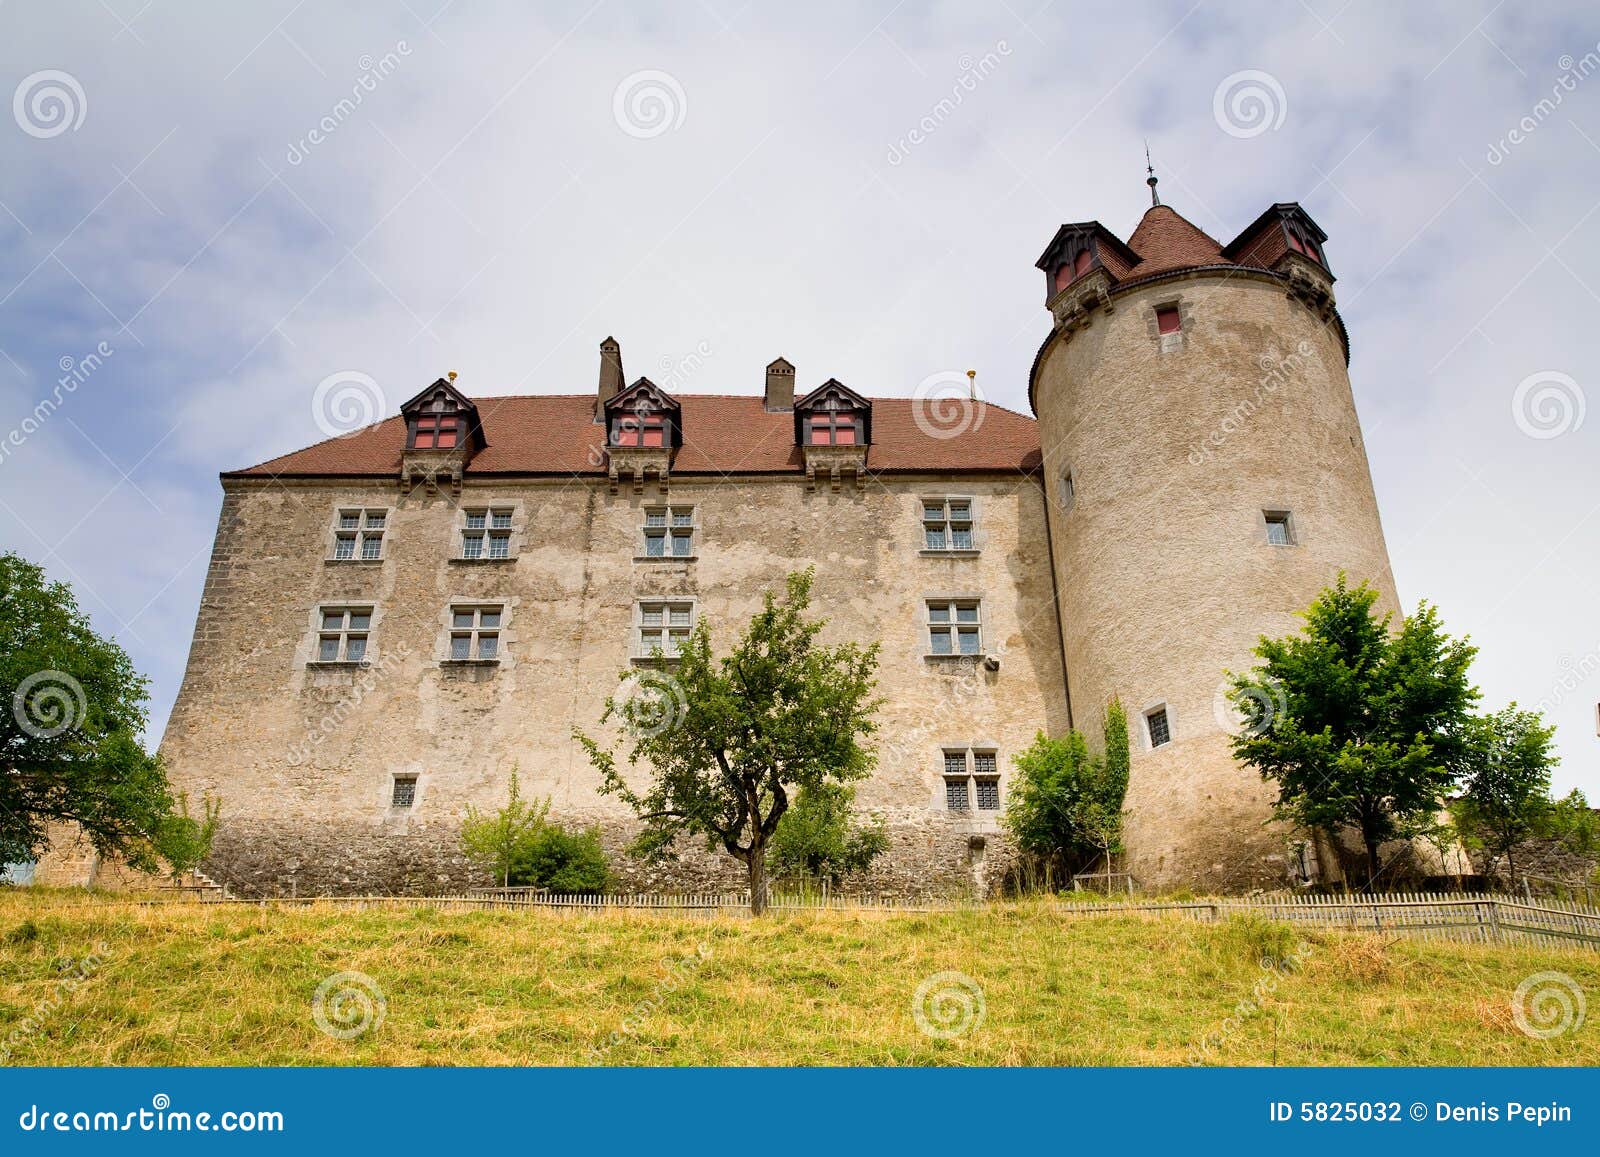 gruyeres castle, fribourg canton, switzerland